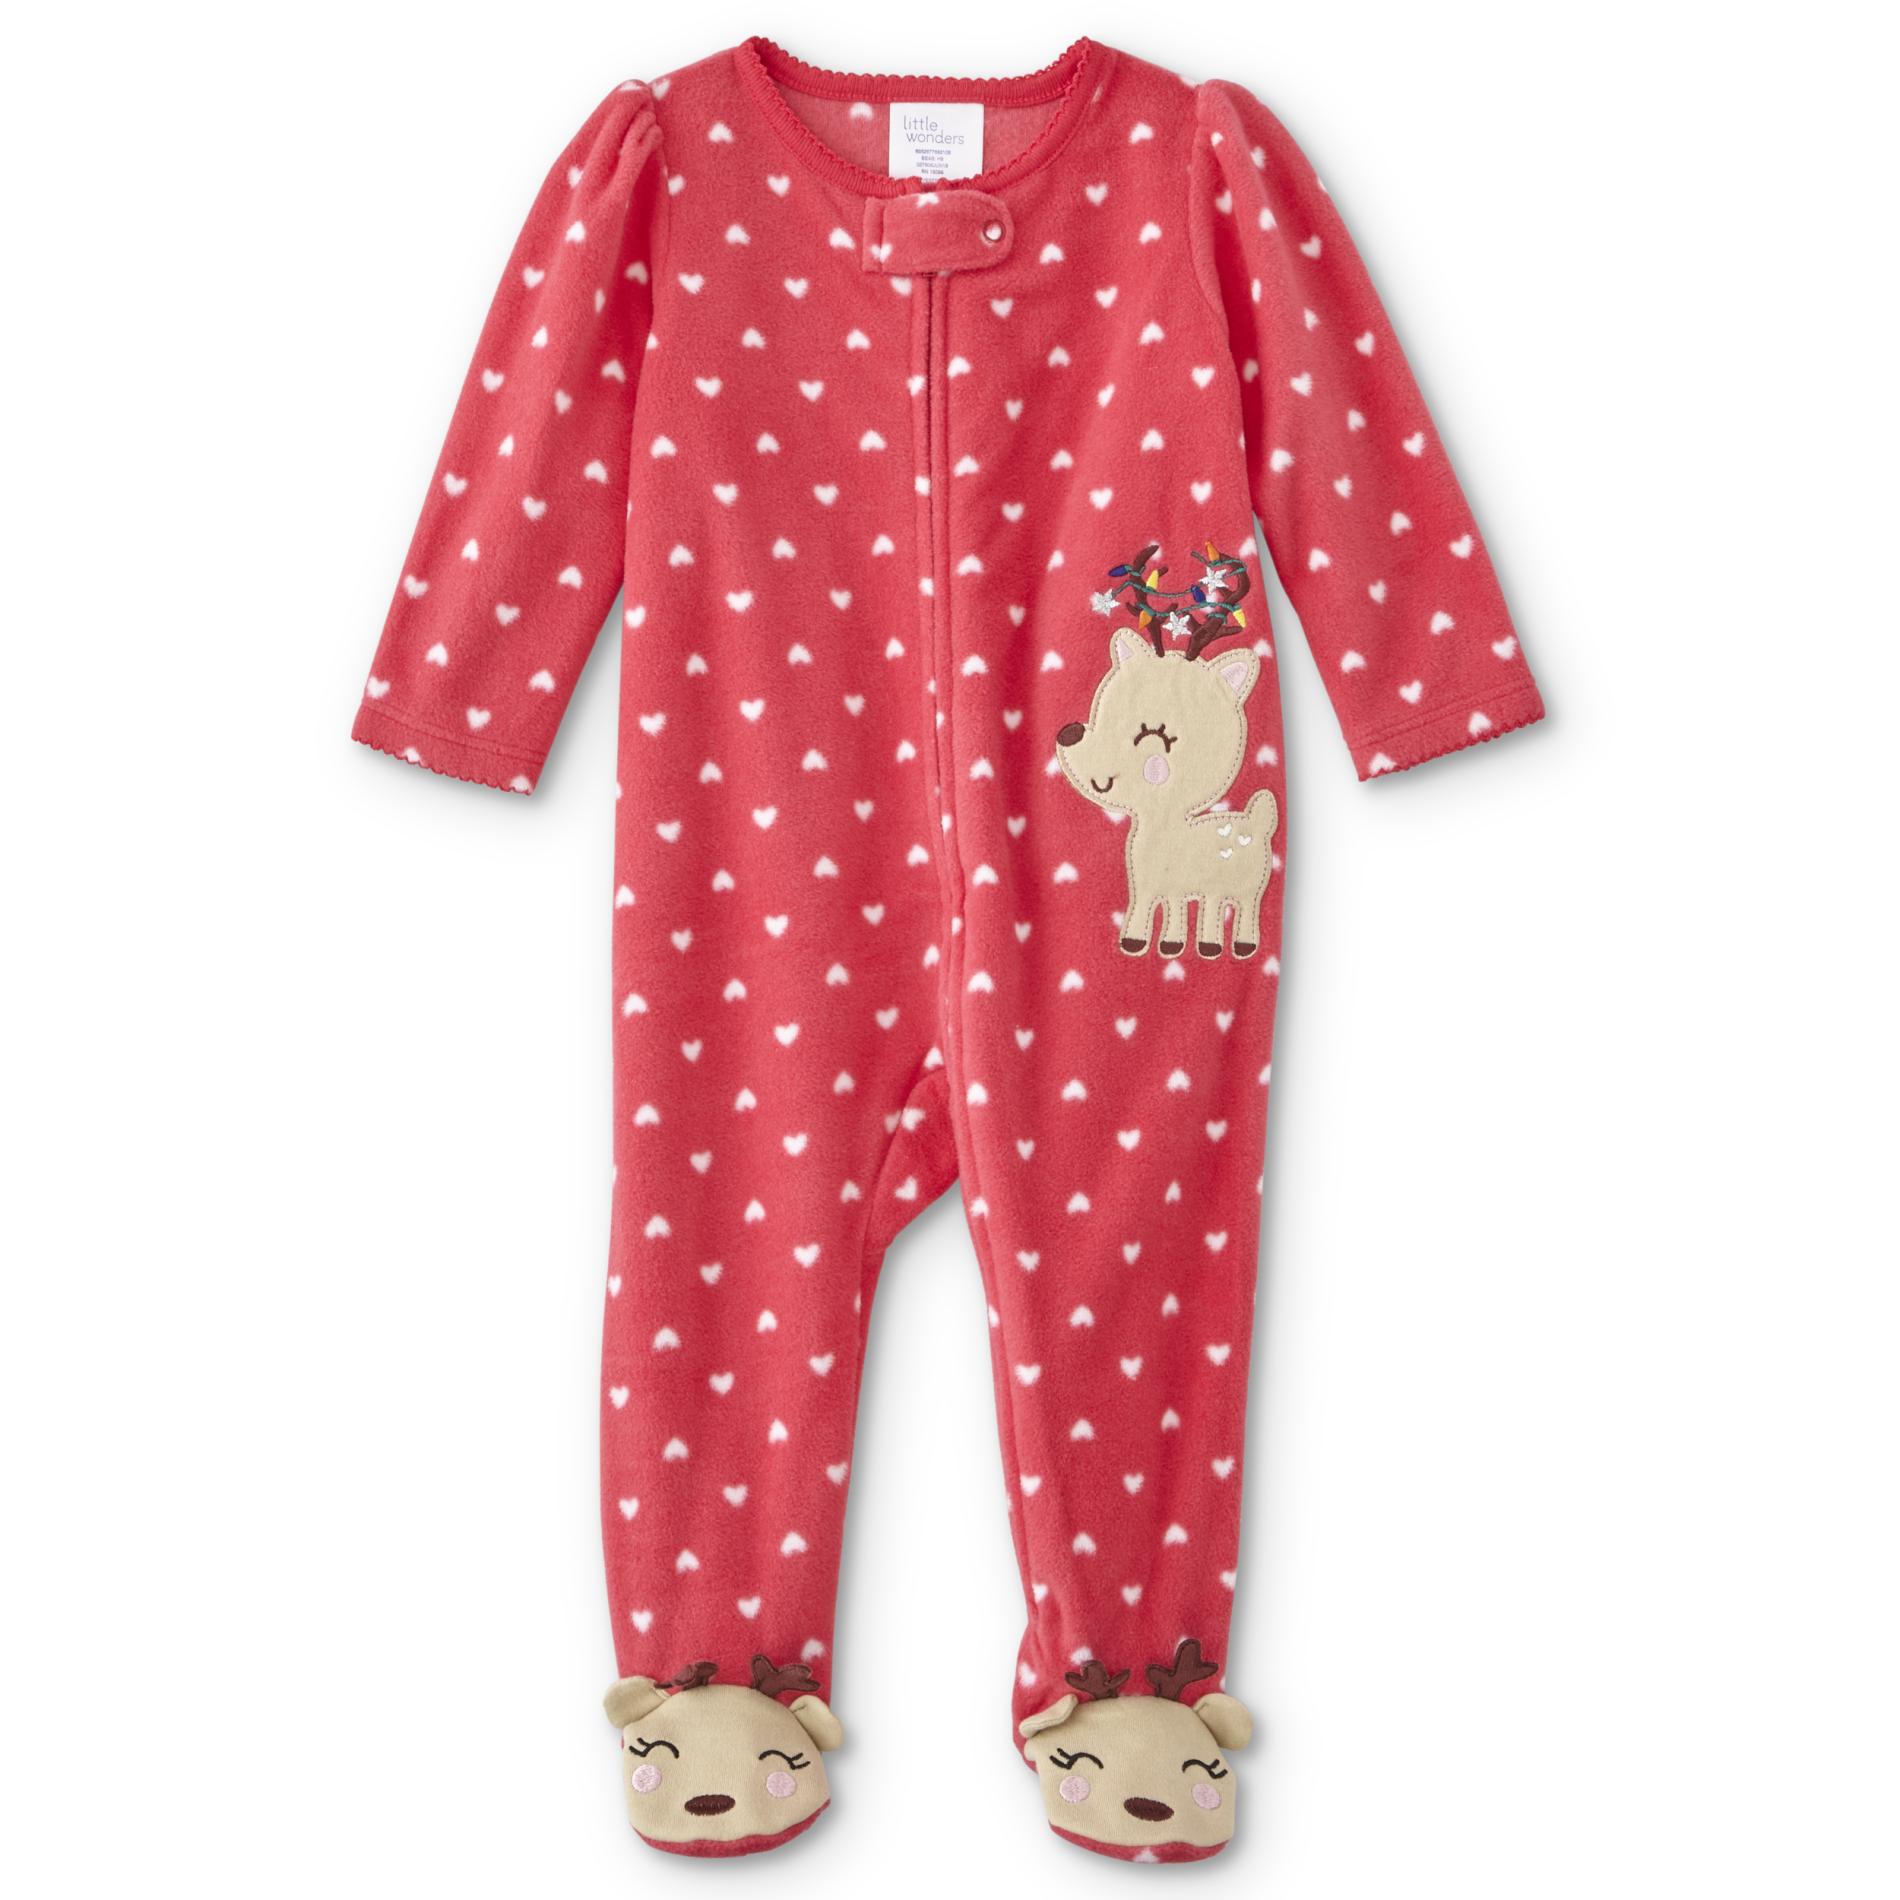 Little Wonders Infant Girls' Fleece Sleeper Pajamas - Reindeer